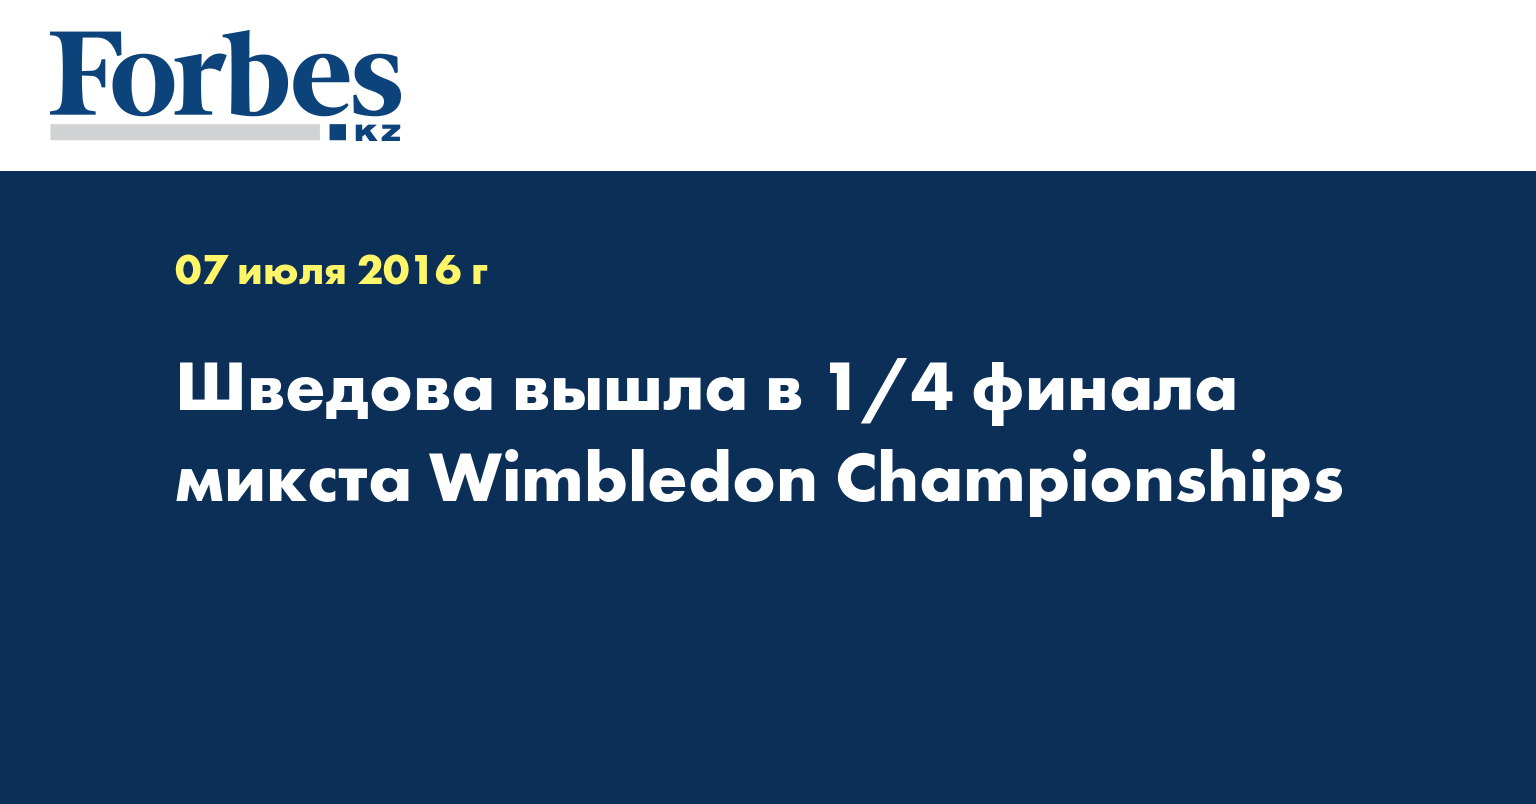 Шведова вышла в 1/4 финала микста Wimbledon Championships